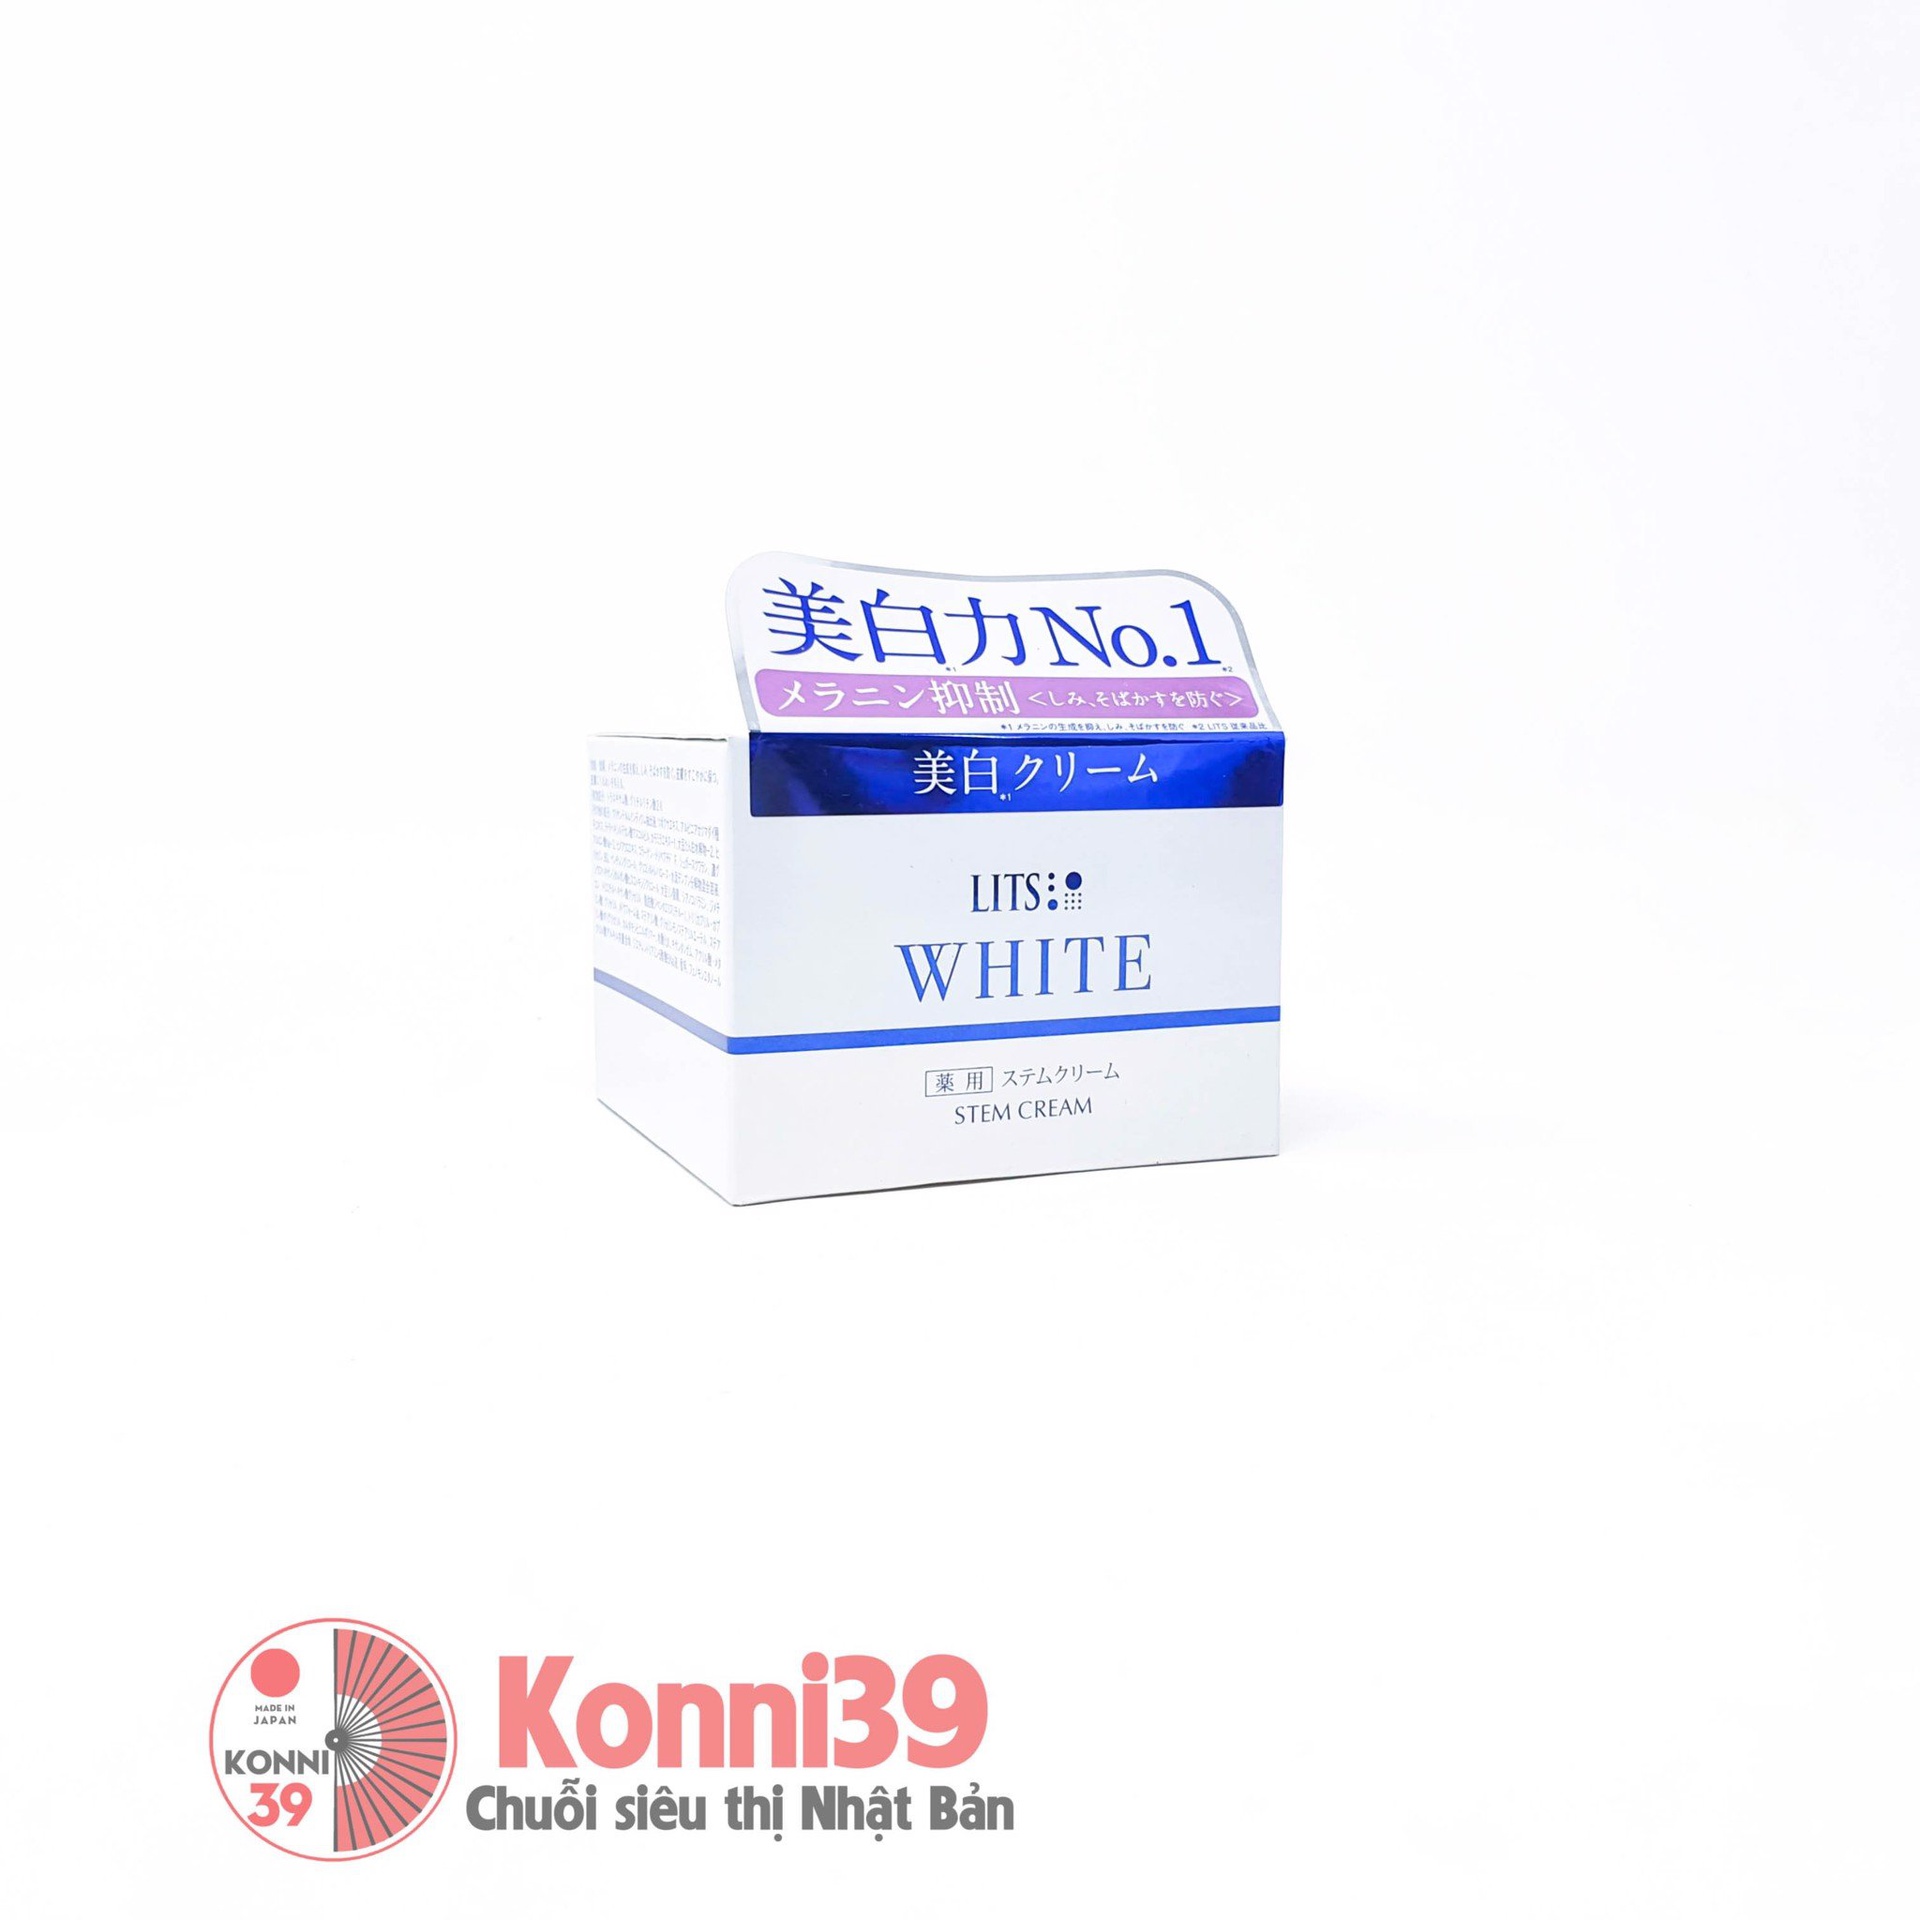 Kem dưỡng ẩm trắng da LITS White Stem Cream 30g